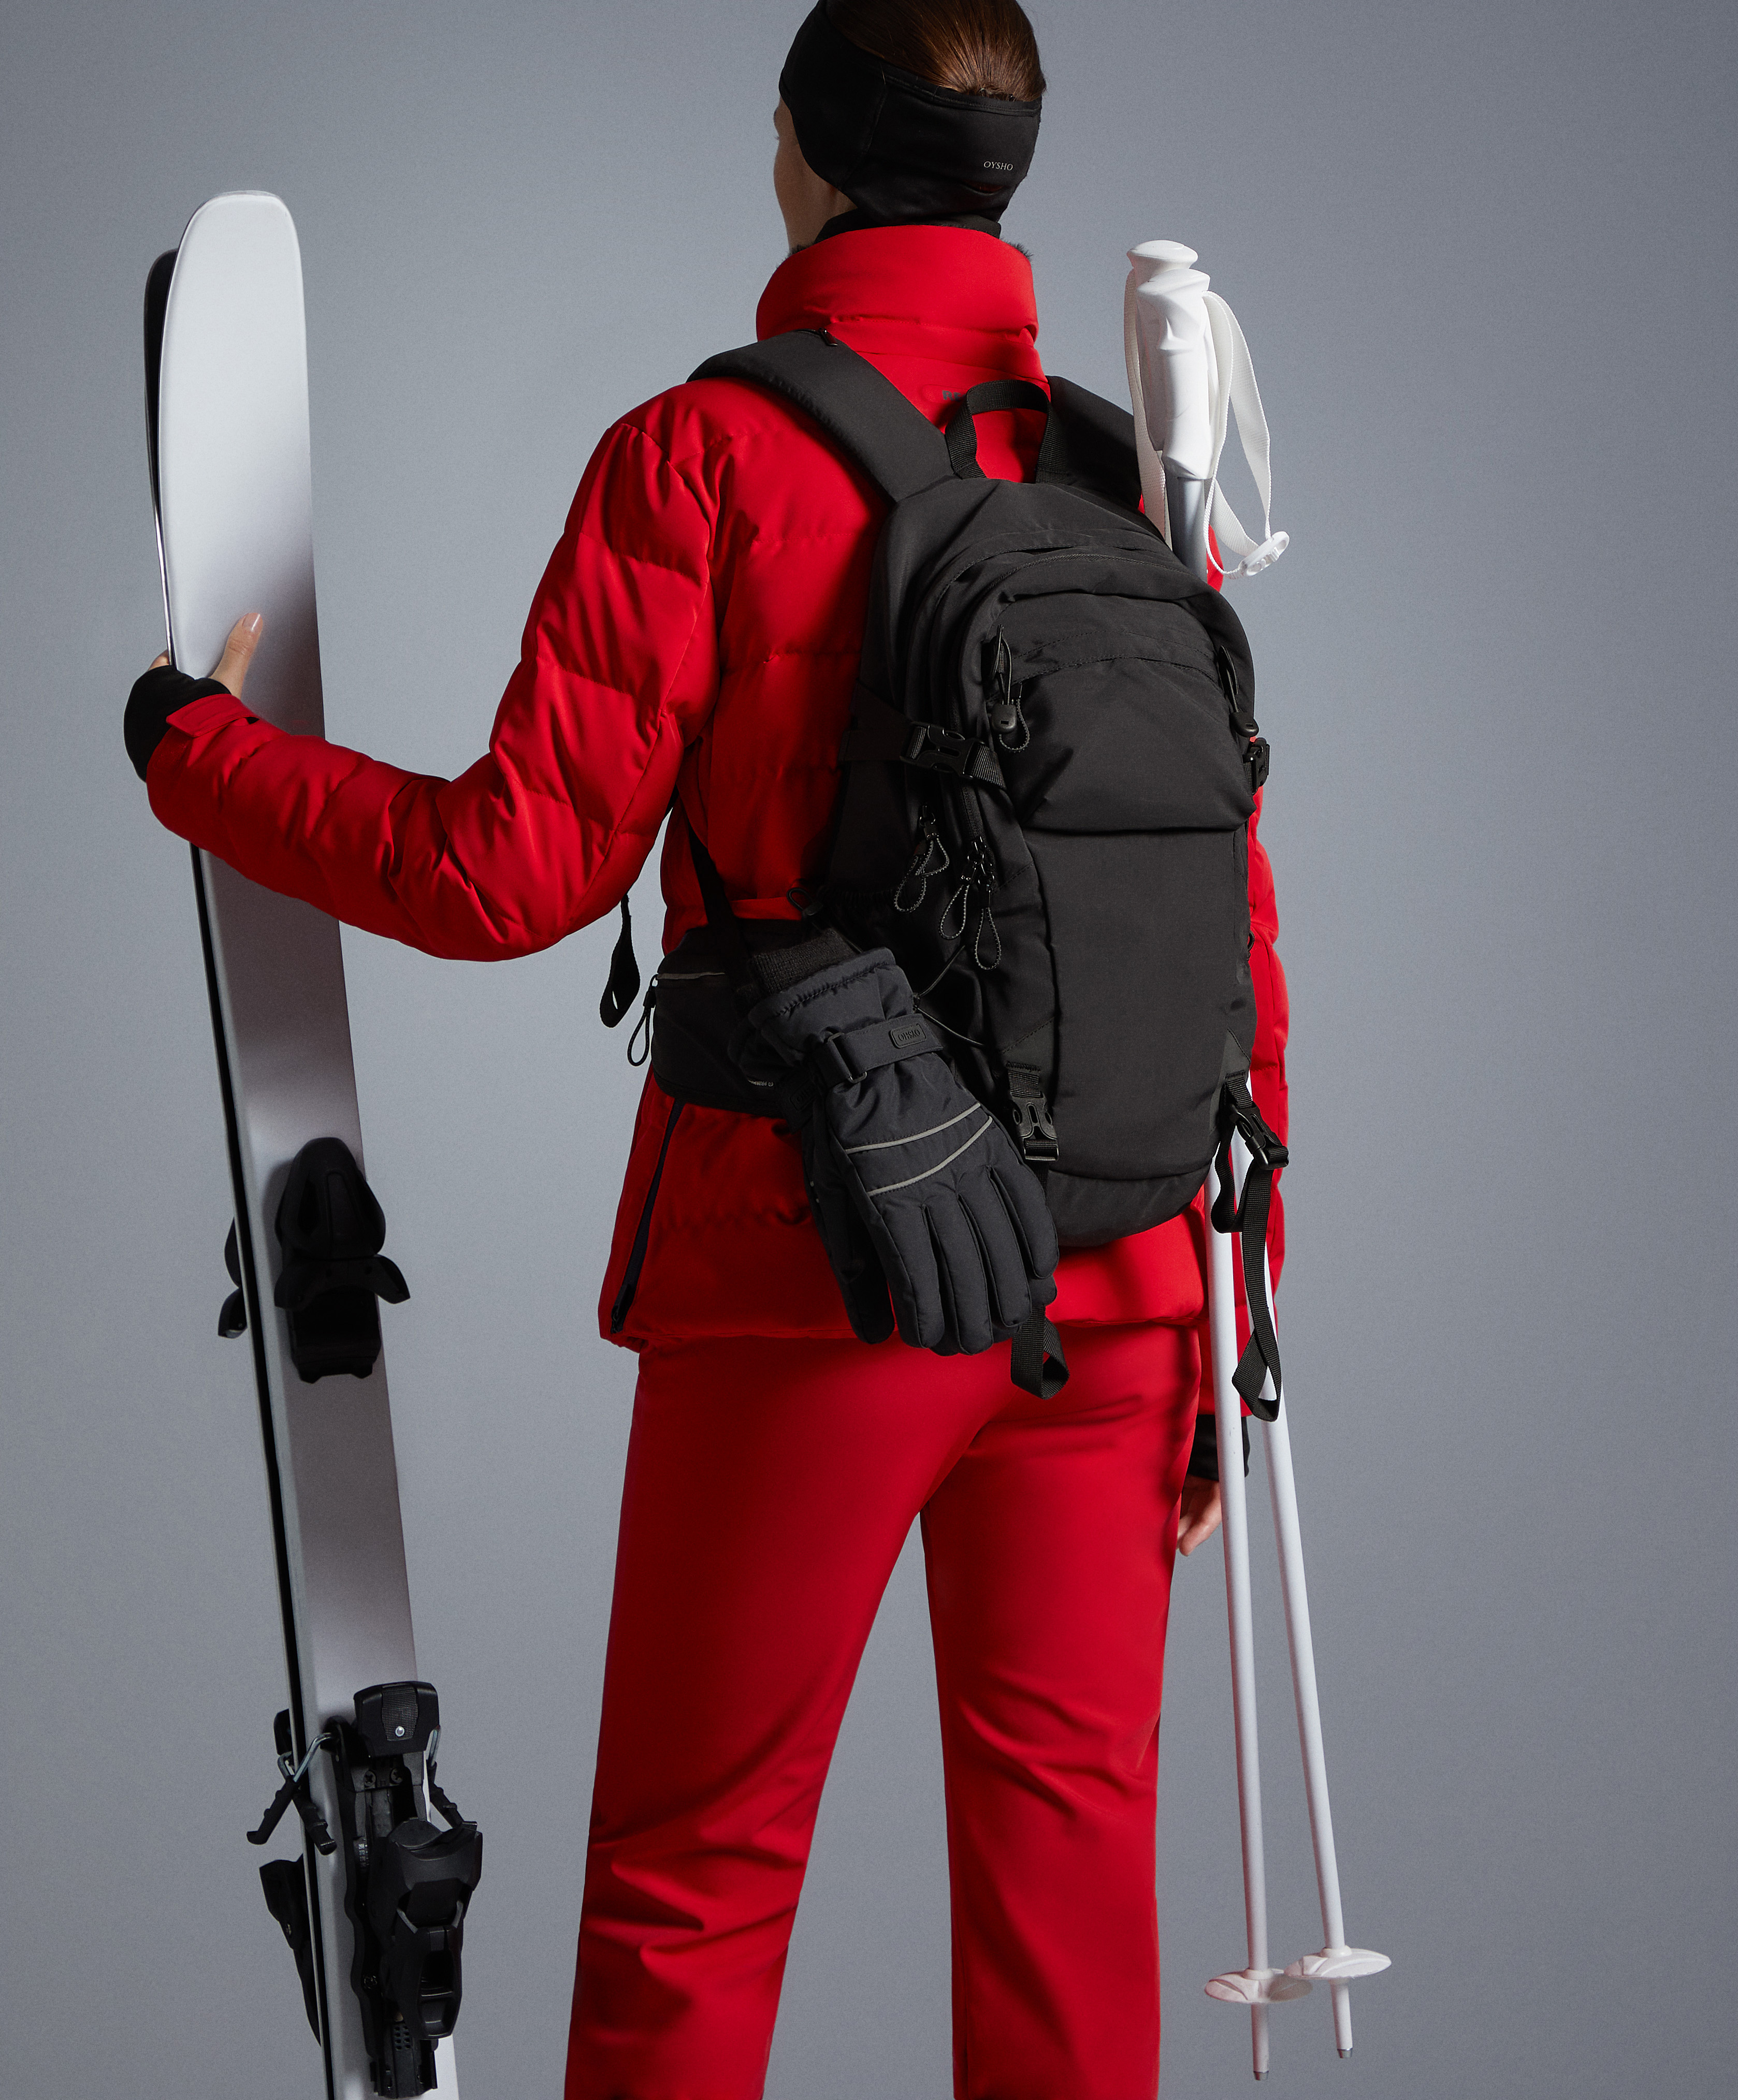 Лыжный рюкзак SKI Water Repellent